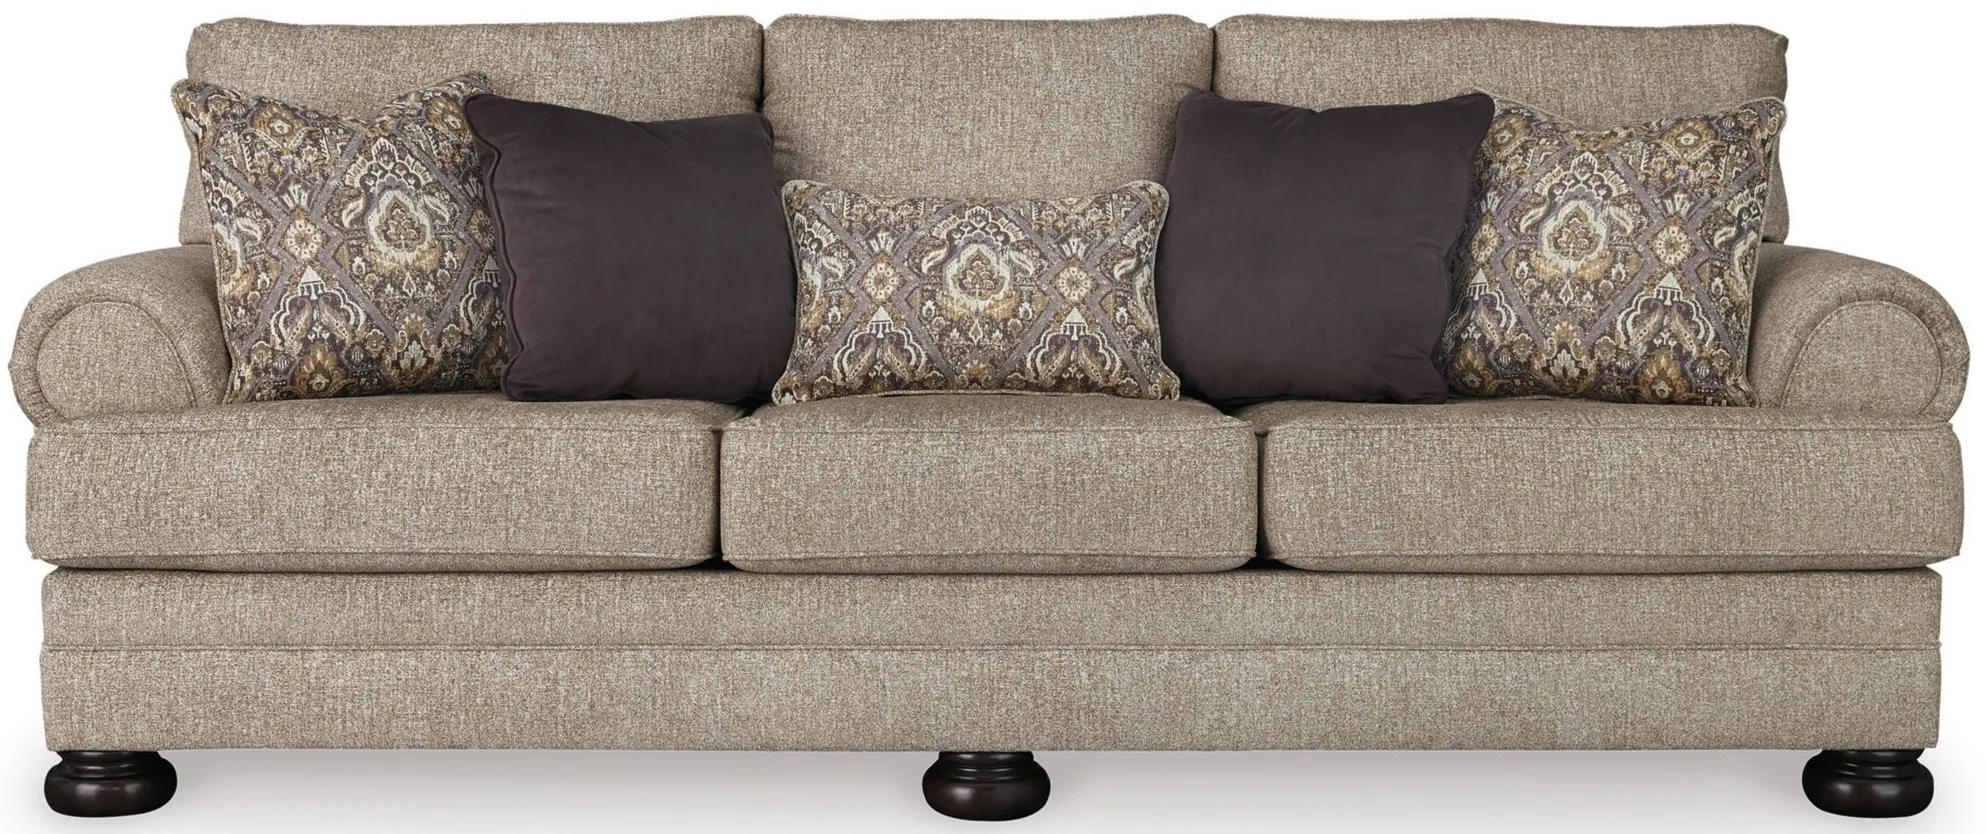 Kananwood Sofa in Oatmeal by Ashley Furniture